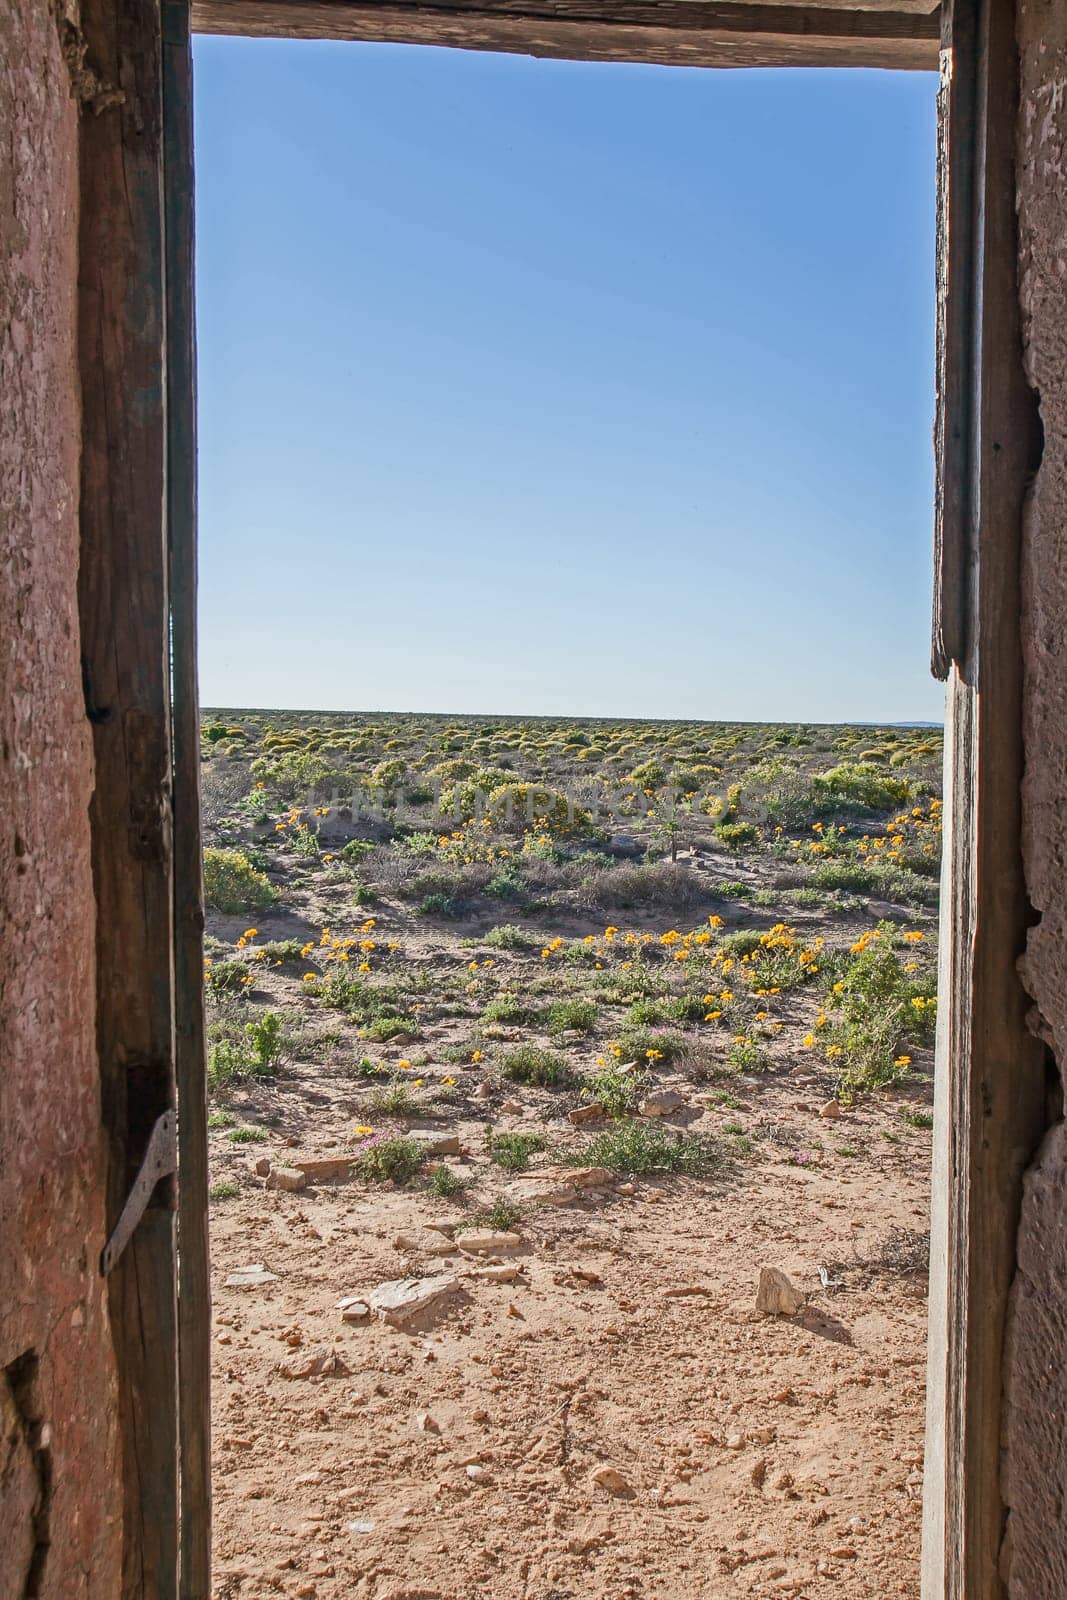 Namaqualand doorway view 11571 by kobus_peche